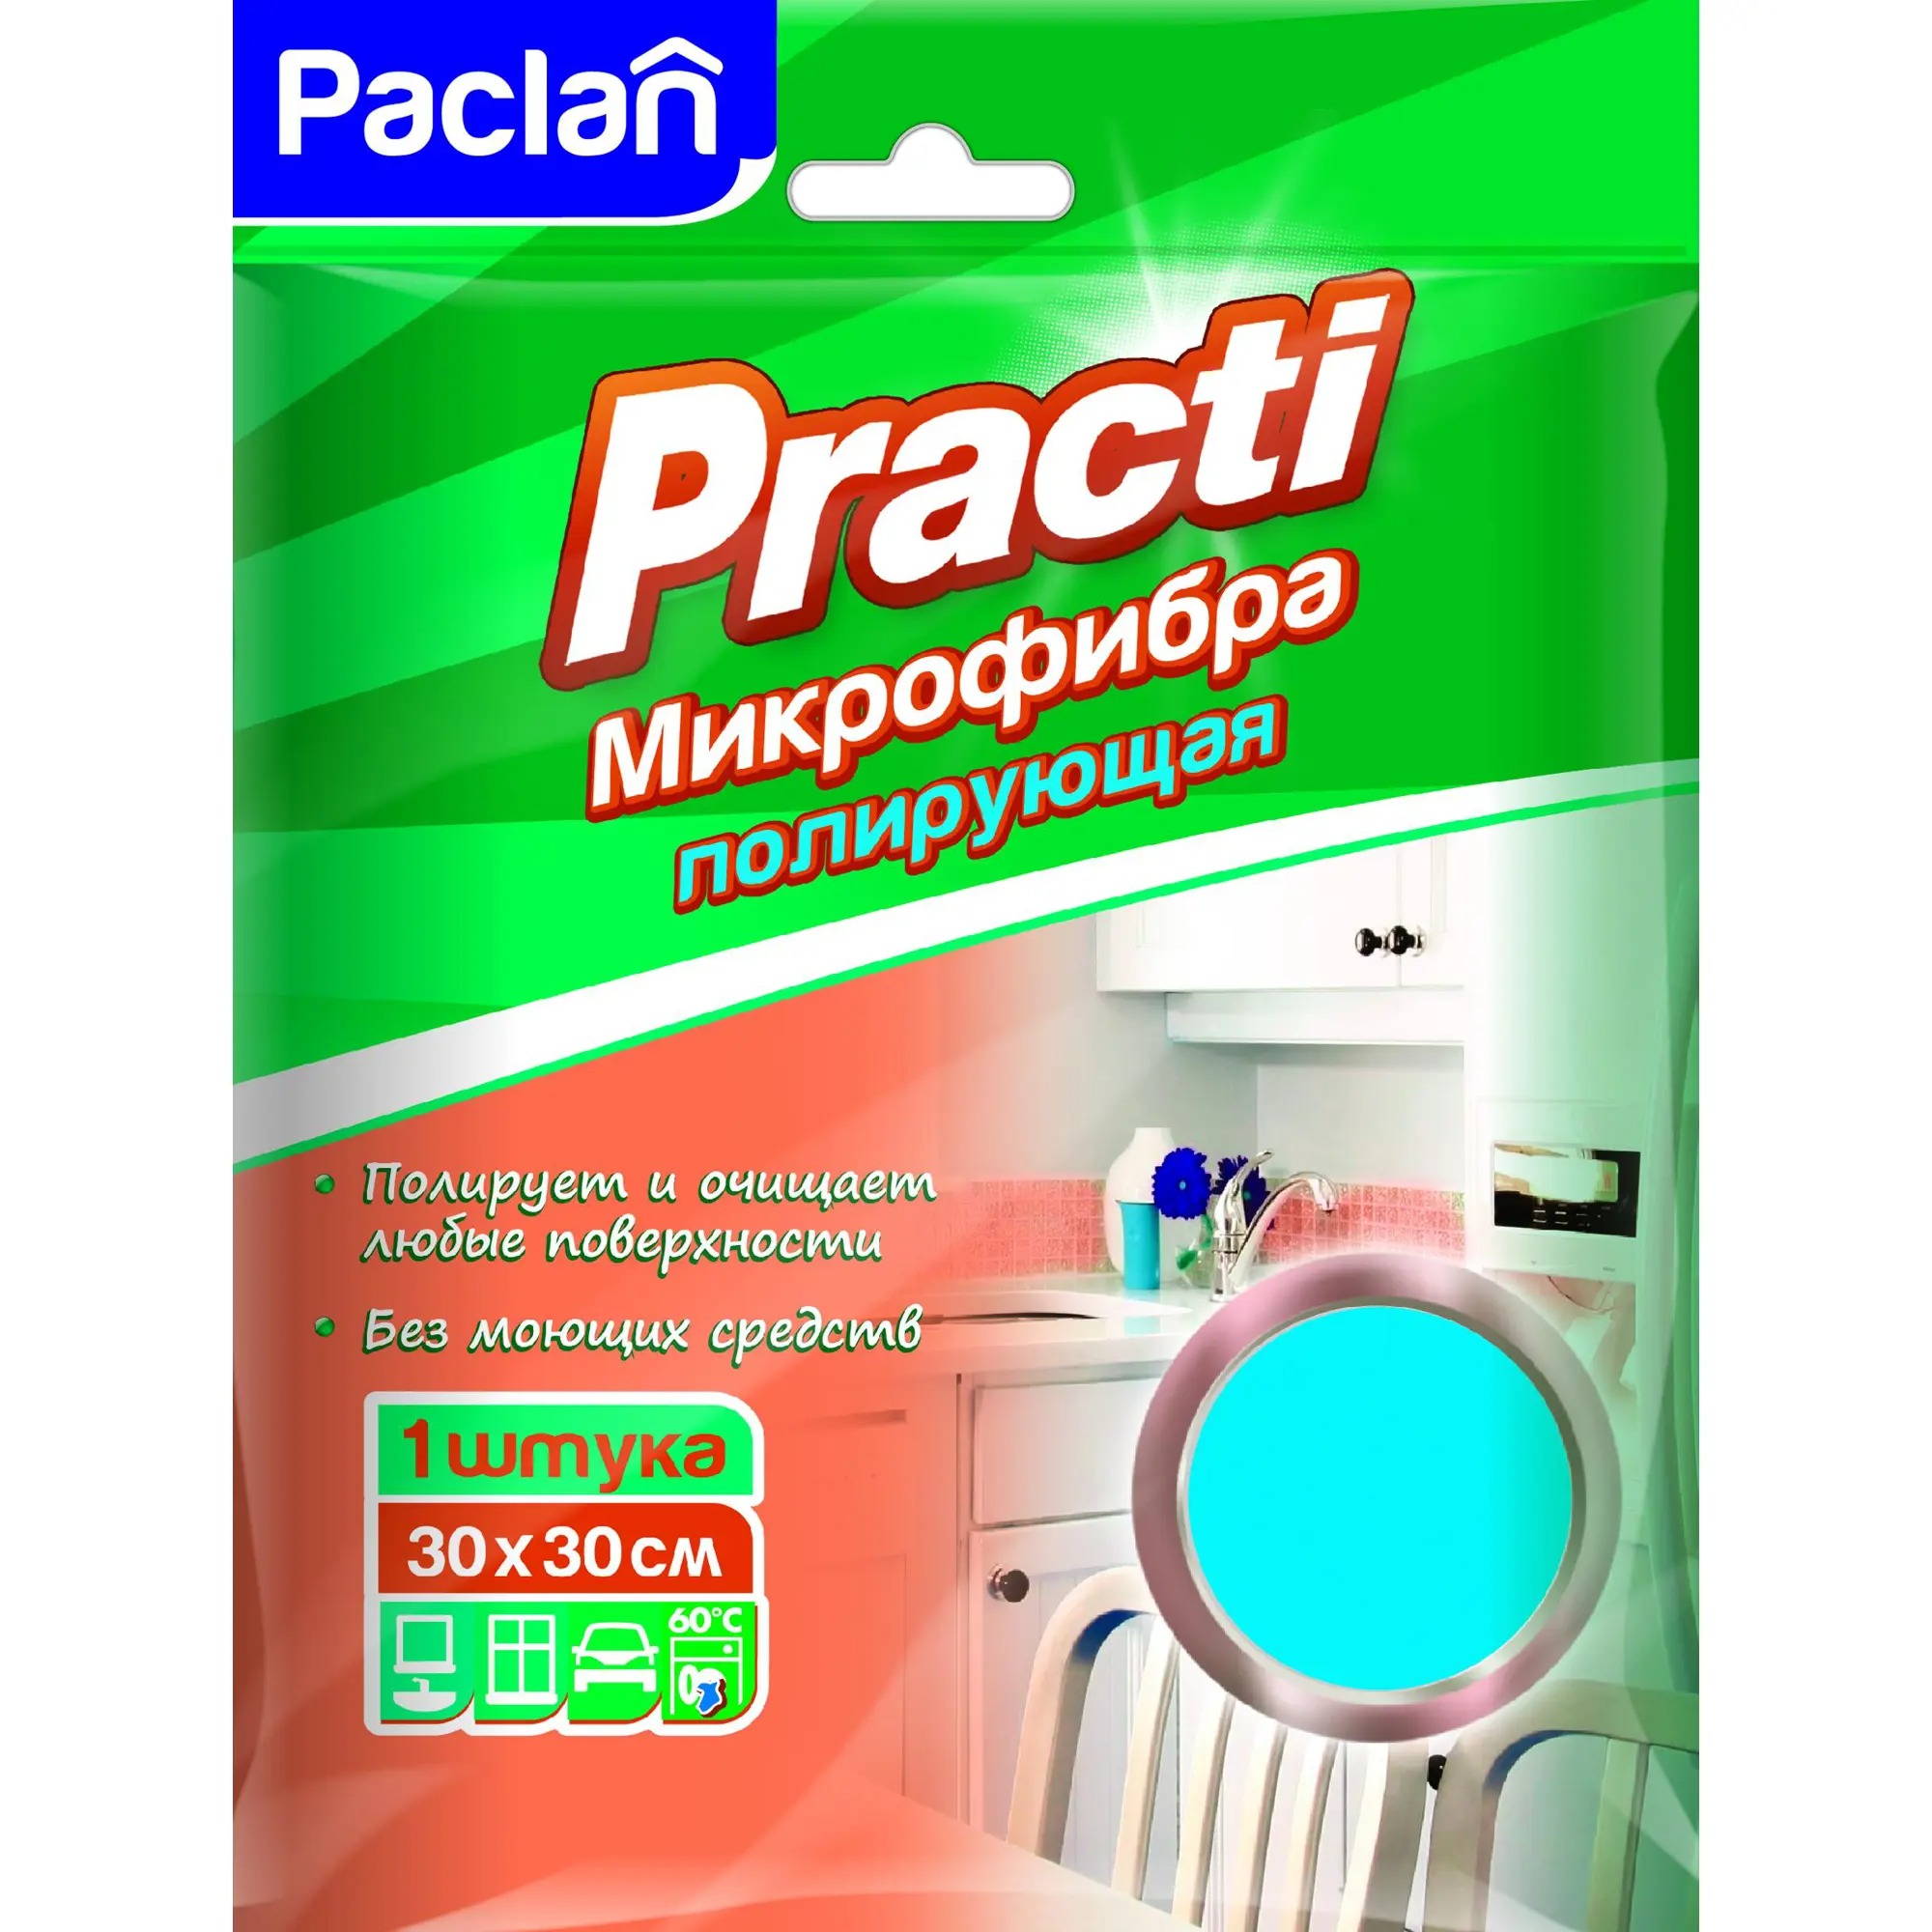 Салфетка для полировки Paclan микрофибра 30х30 см салфетка из микрофибры для сушки и полировки 30 х 30 см 560 г м²